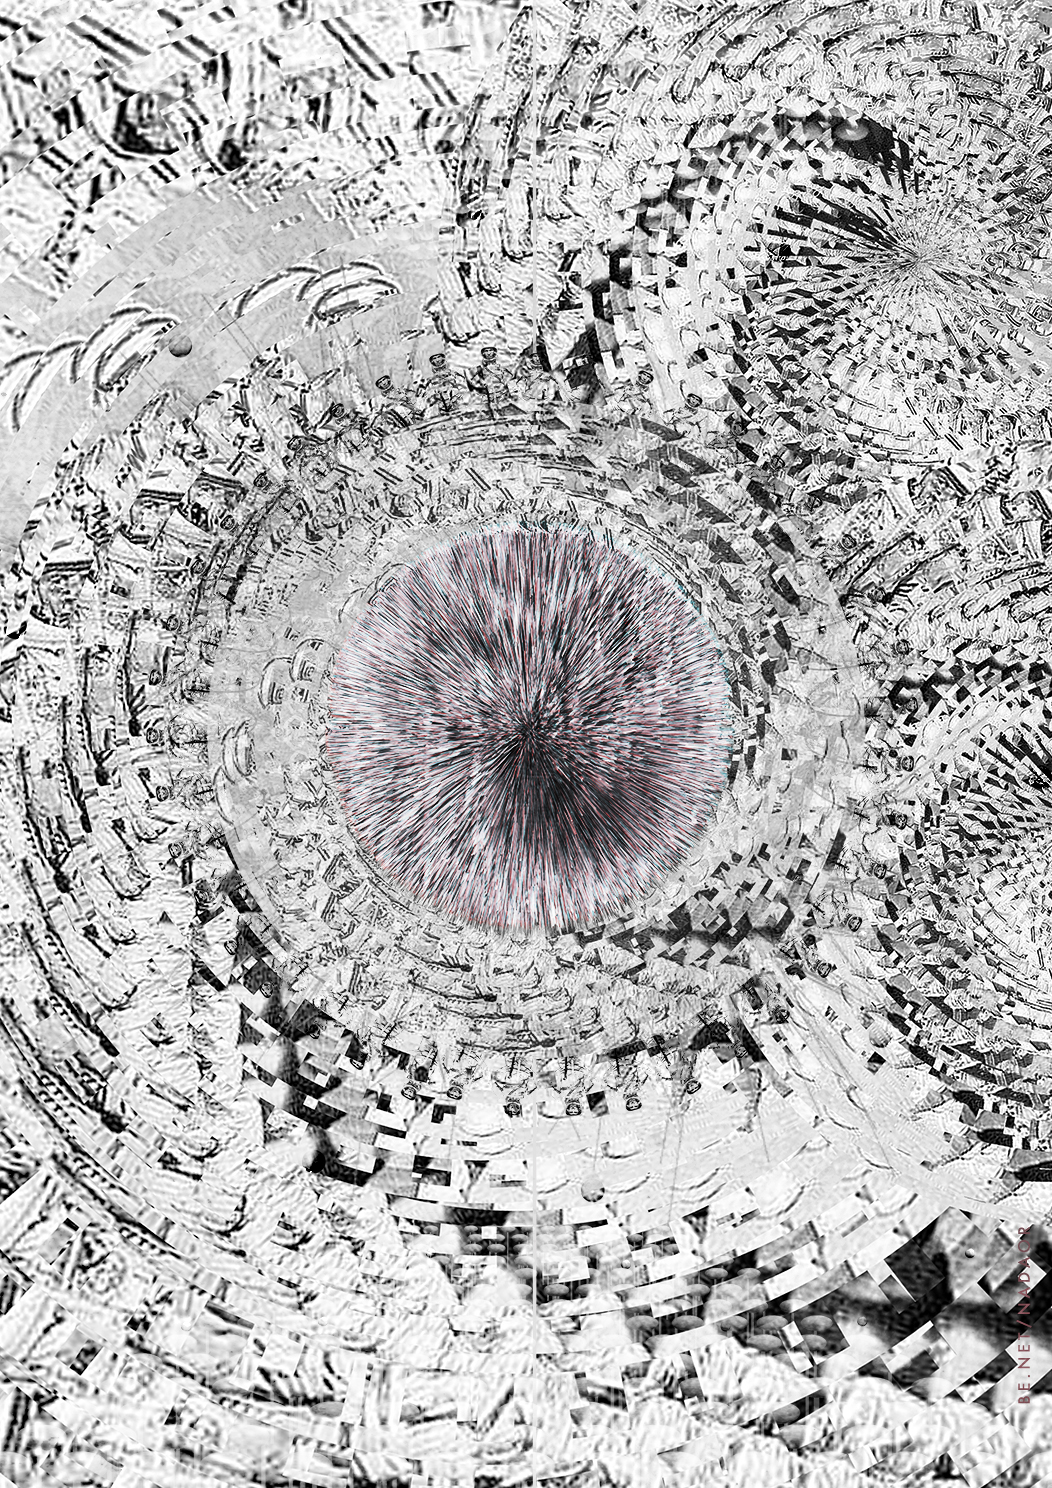 Adobe Portfolio experimental wormhole sci-fi science